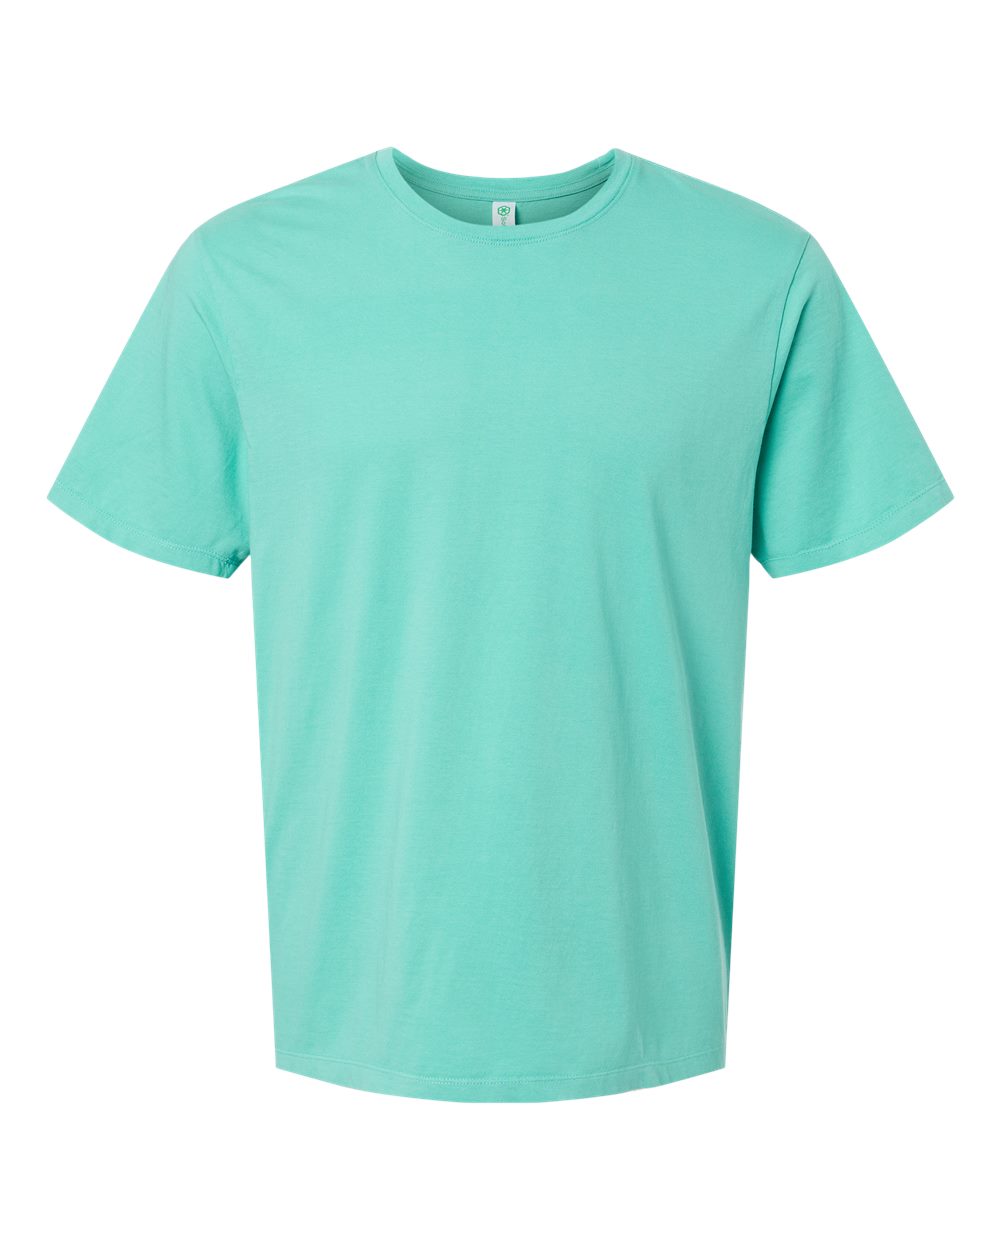 Softshirts® Unisex Organic Cotton T-shirt in seafoam